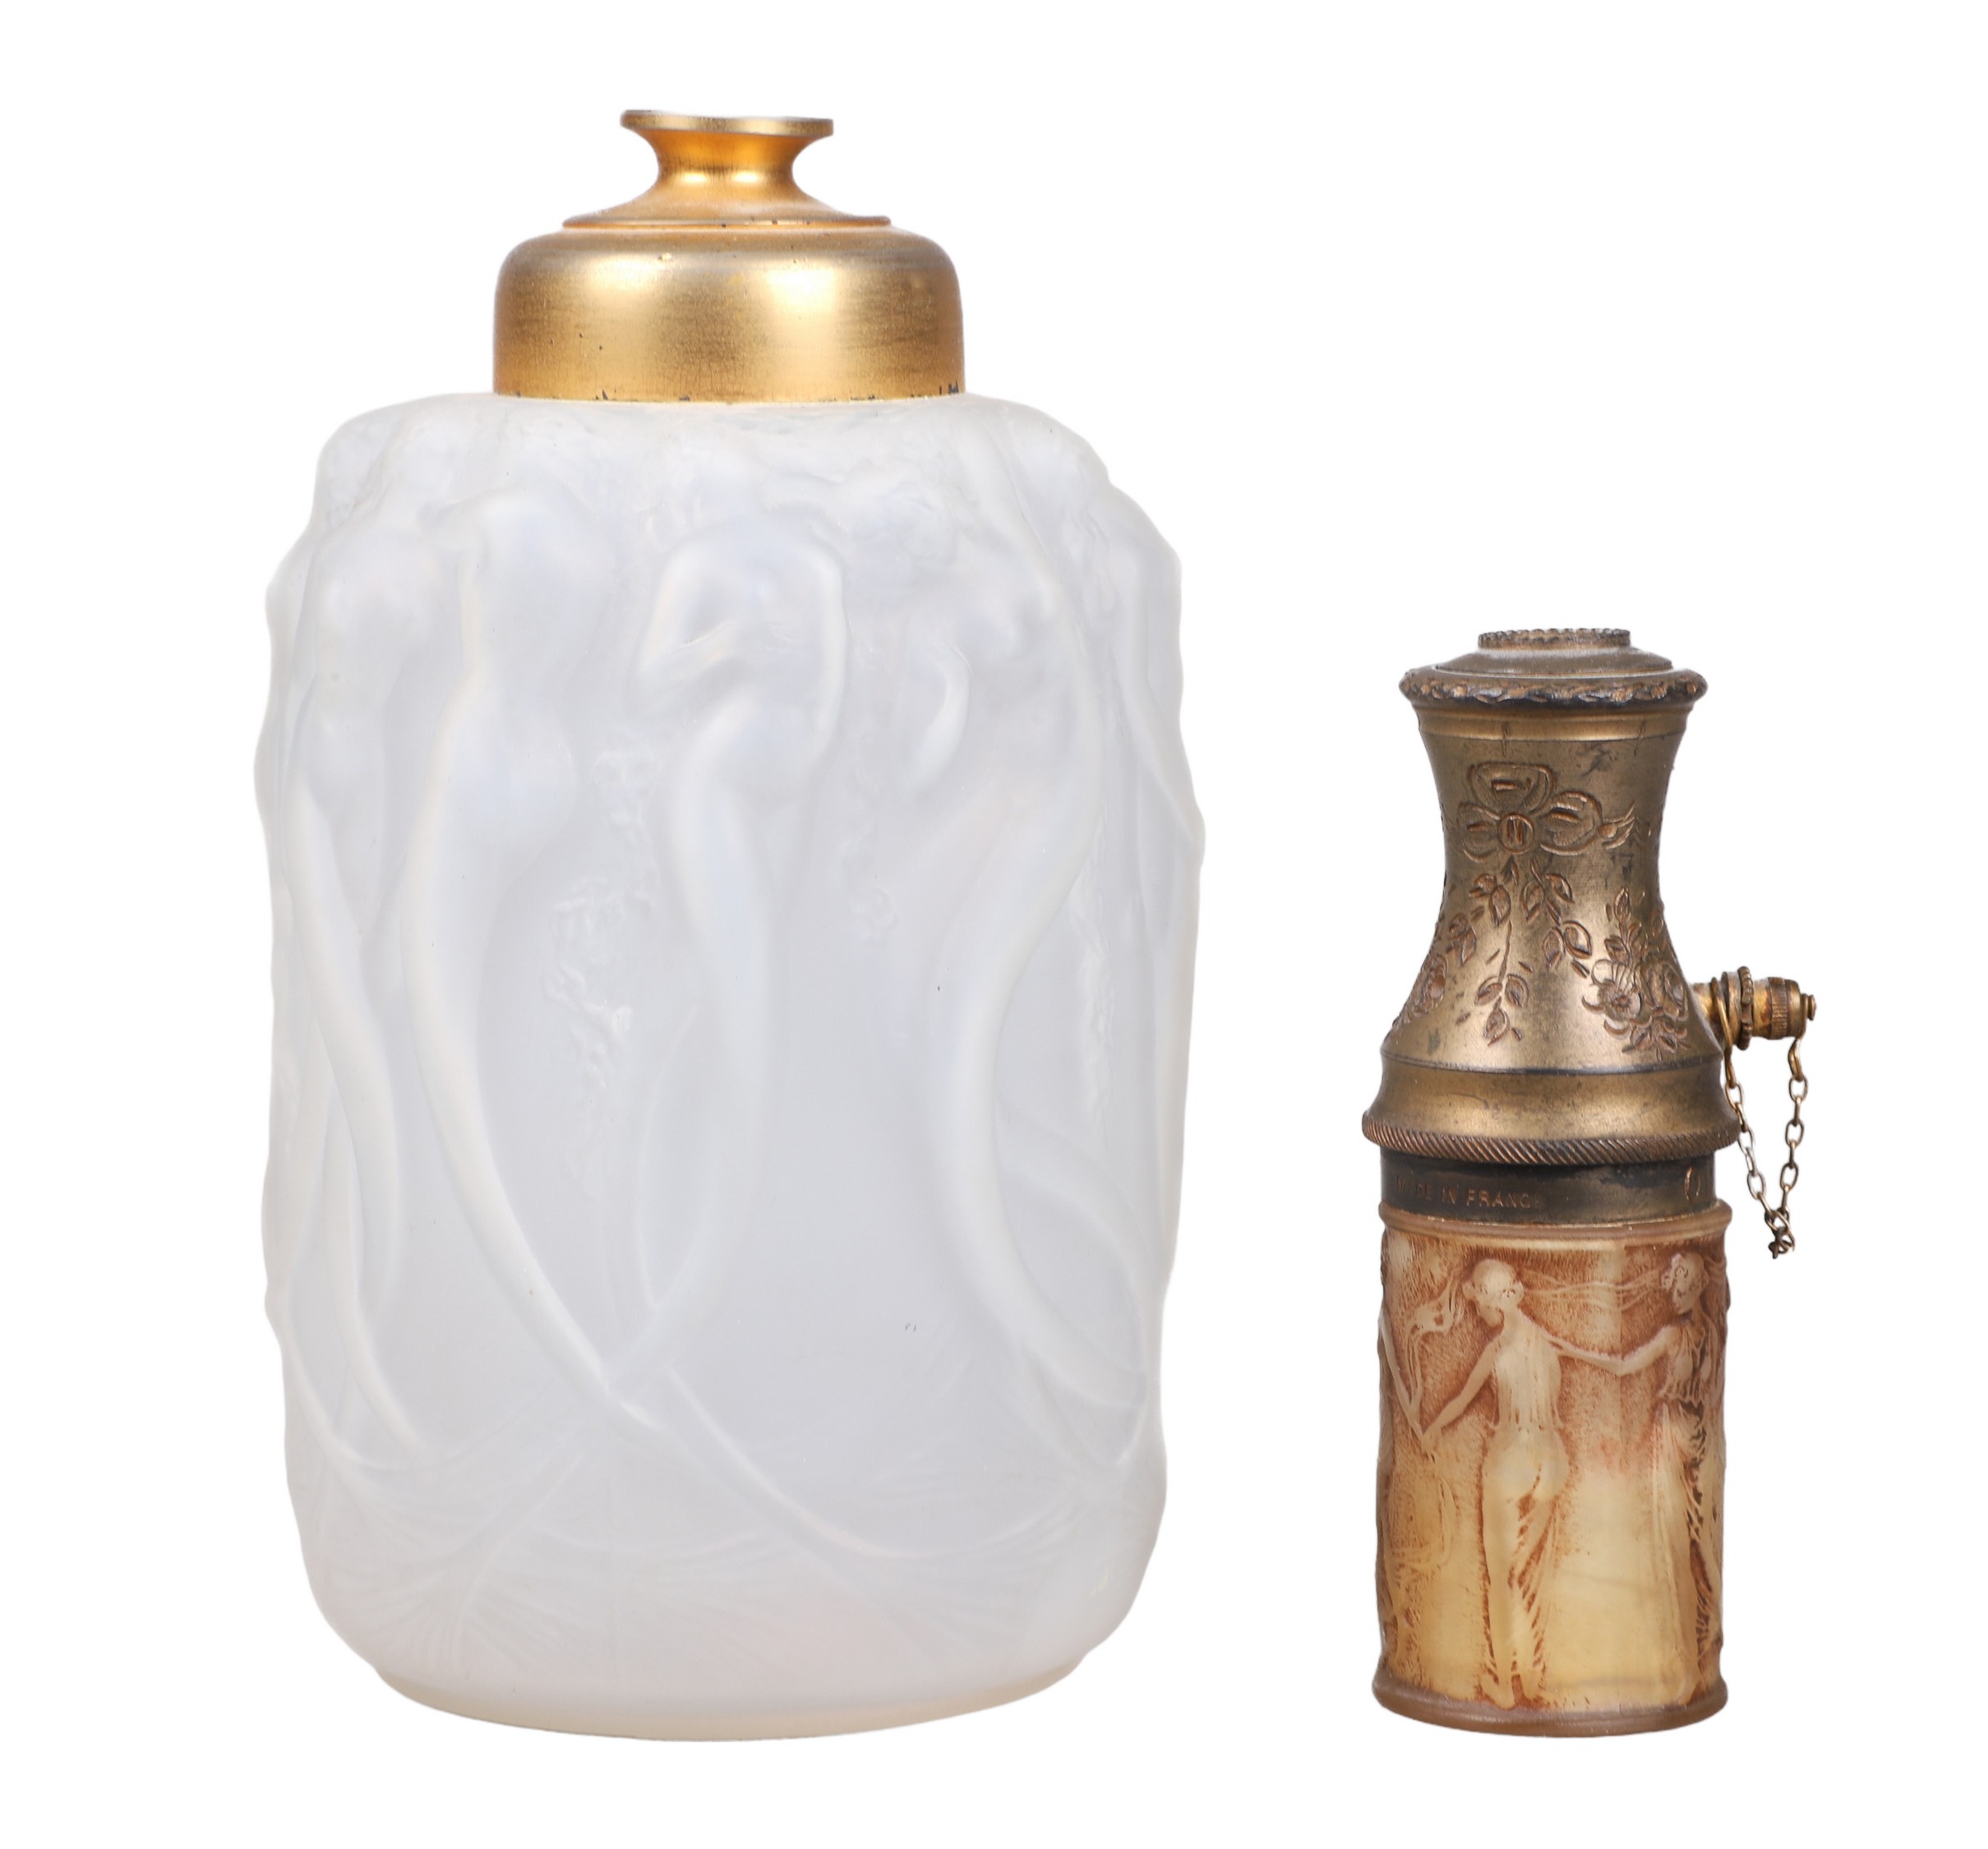  2 Lalique scent bottles to include 2e0e6d